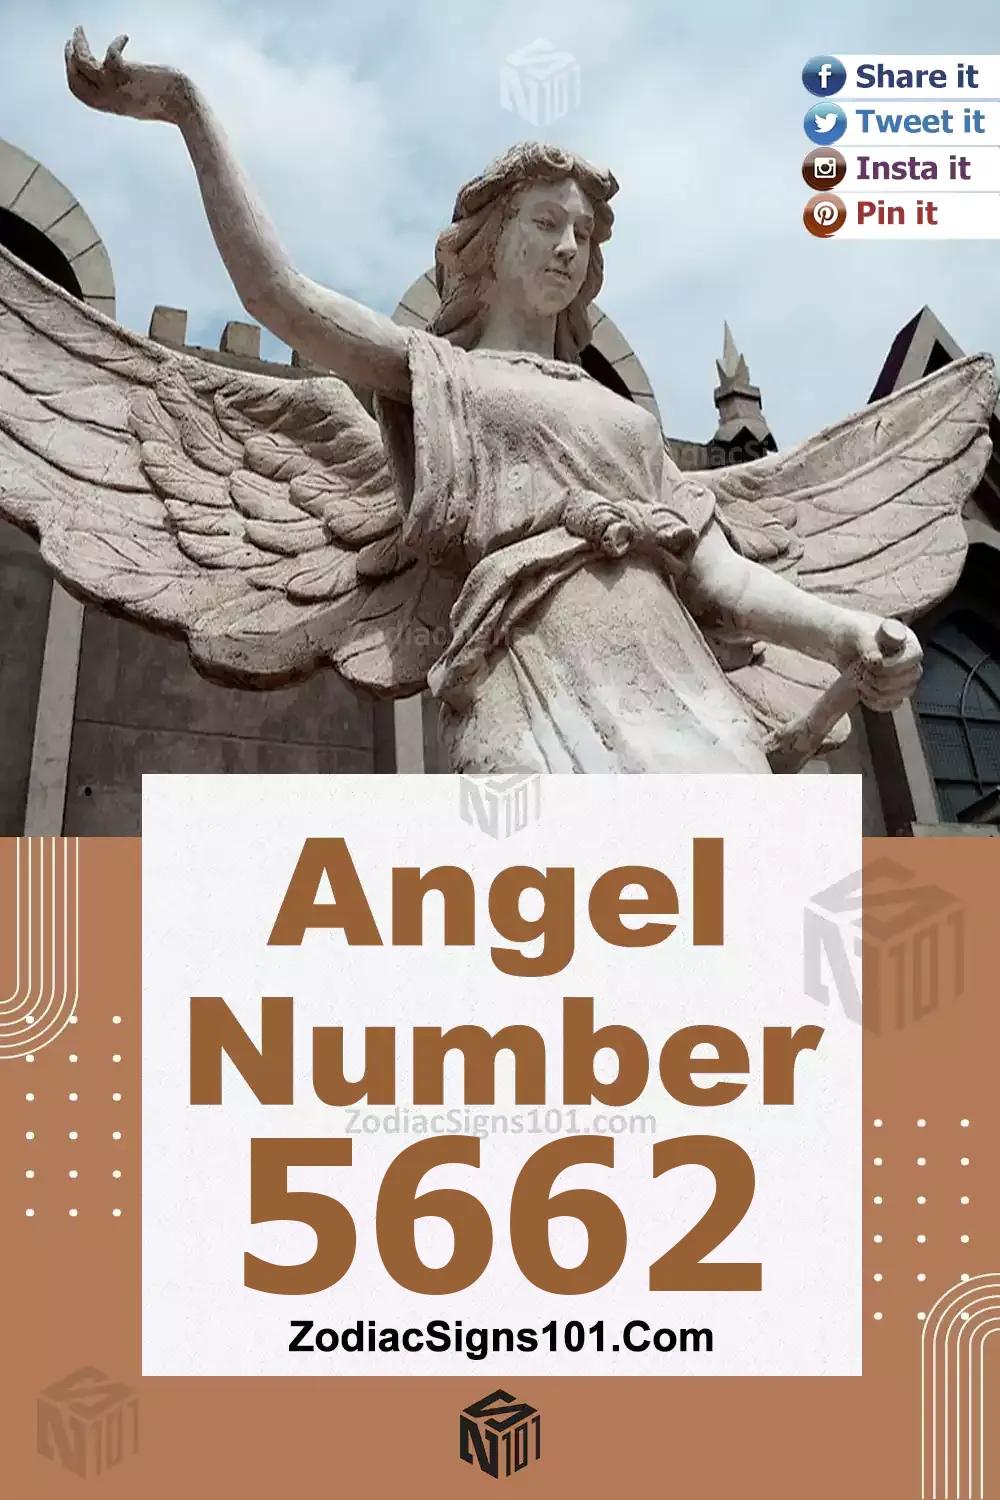 5662-Angel-Number-Meaning.jpg